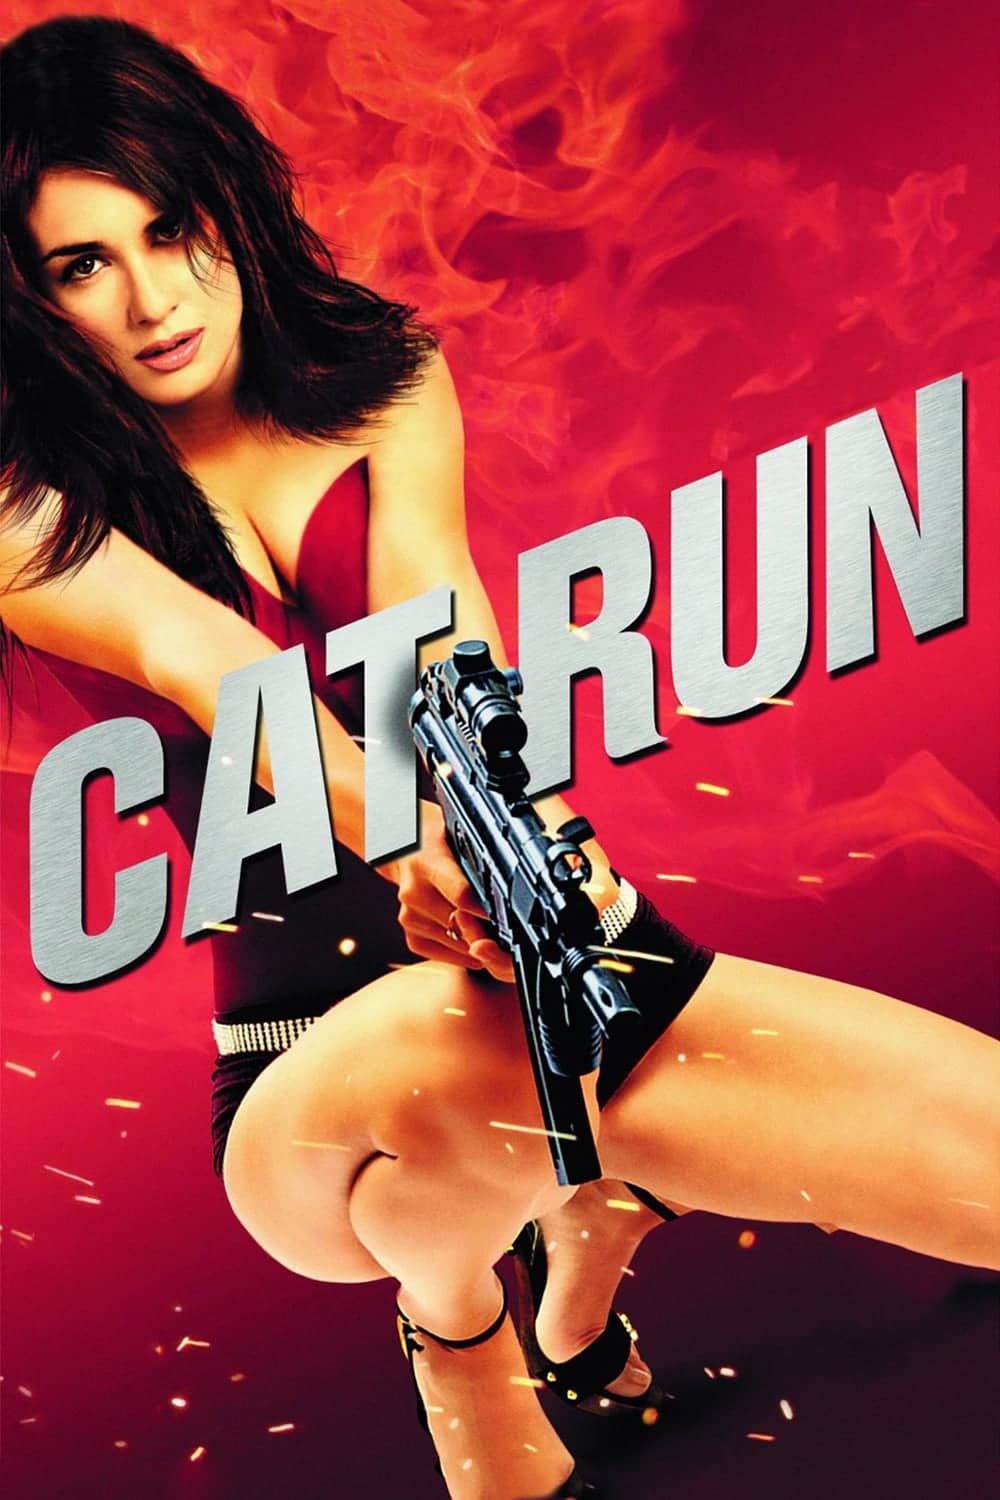 Plakat von "Cat Run"